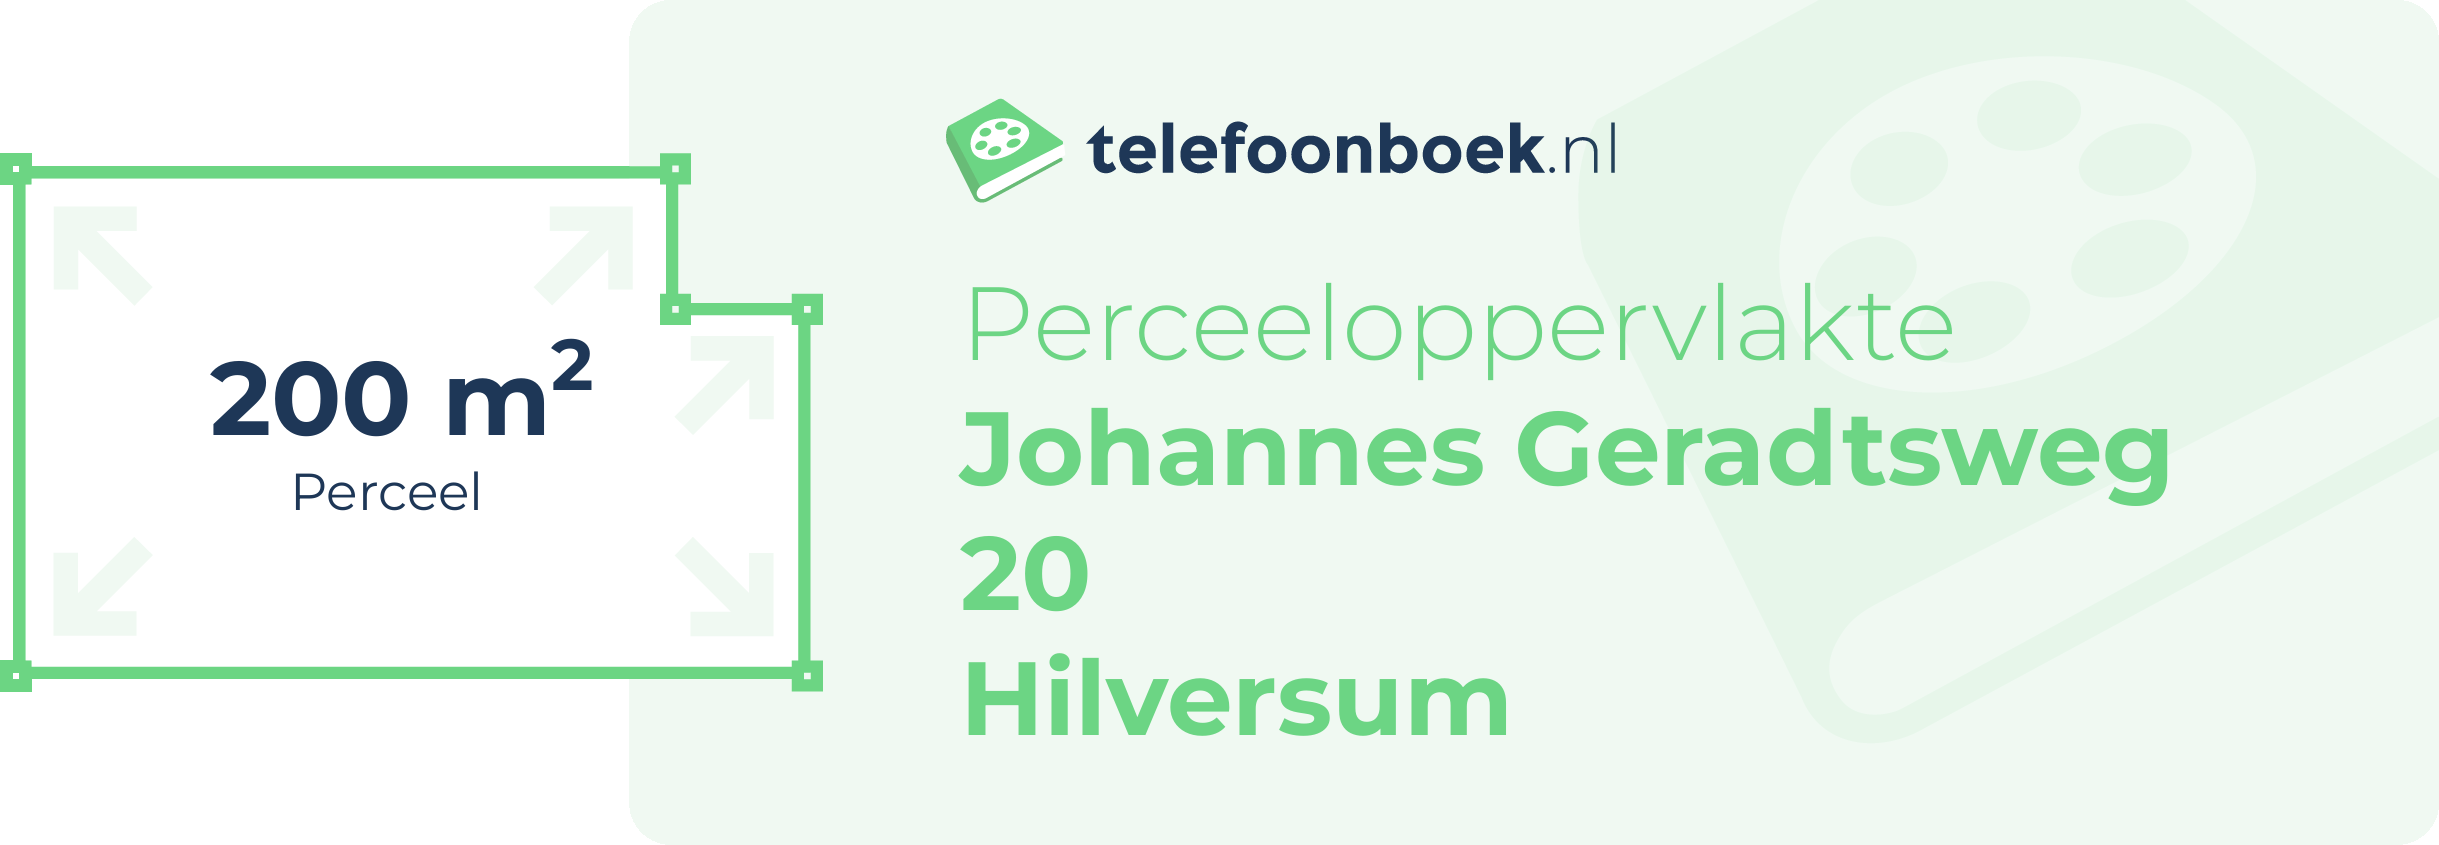 Perceeloppervlakte Johannes Geradtsweg 20 Hilversum